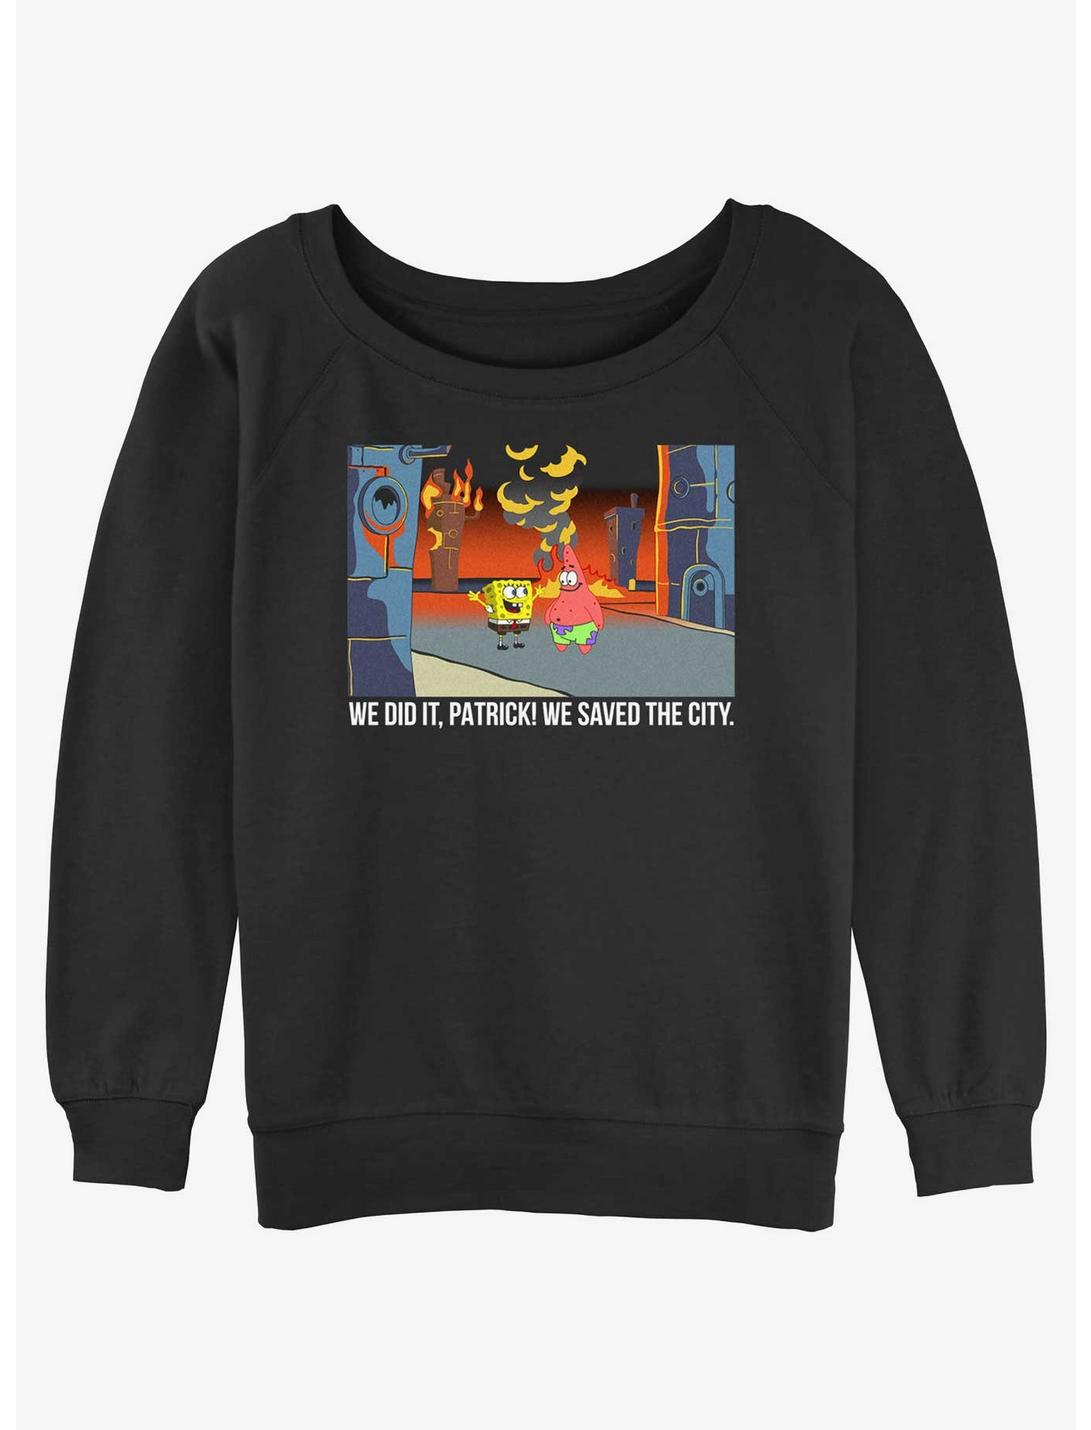 Spongebob Squarepants We Saved The City Womens Slouchy Sweatshirt, BLACK, hi-res